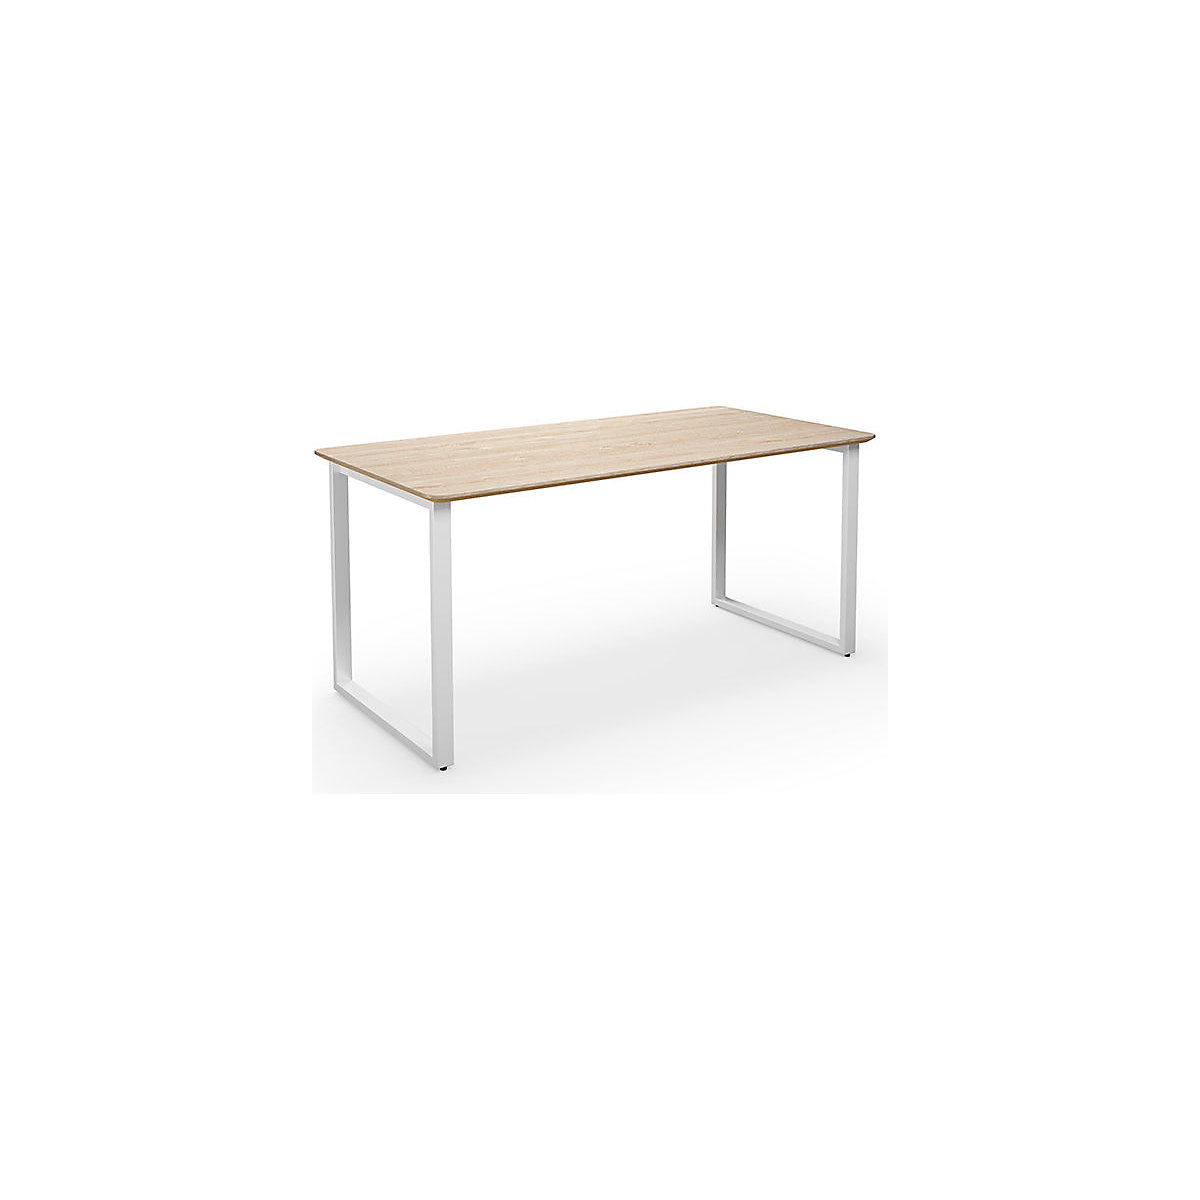 DUO-O Trend multi-purpose desk, straight tabletop, rounded corners, WxD 1600 x 800 mm, oak, white-1